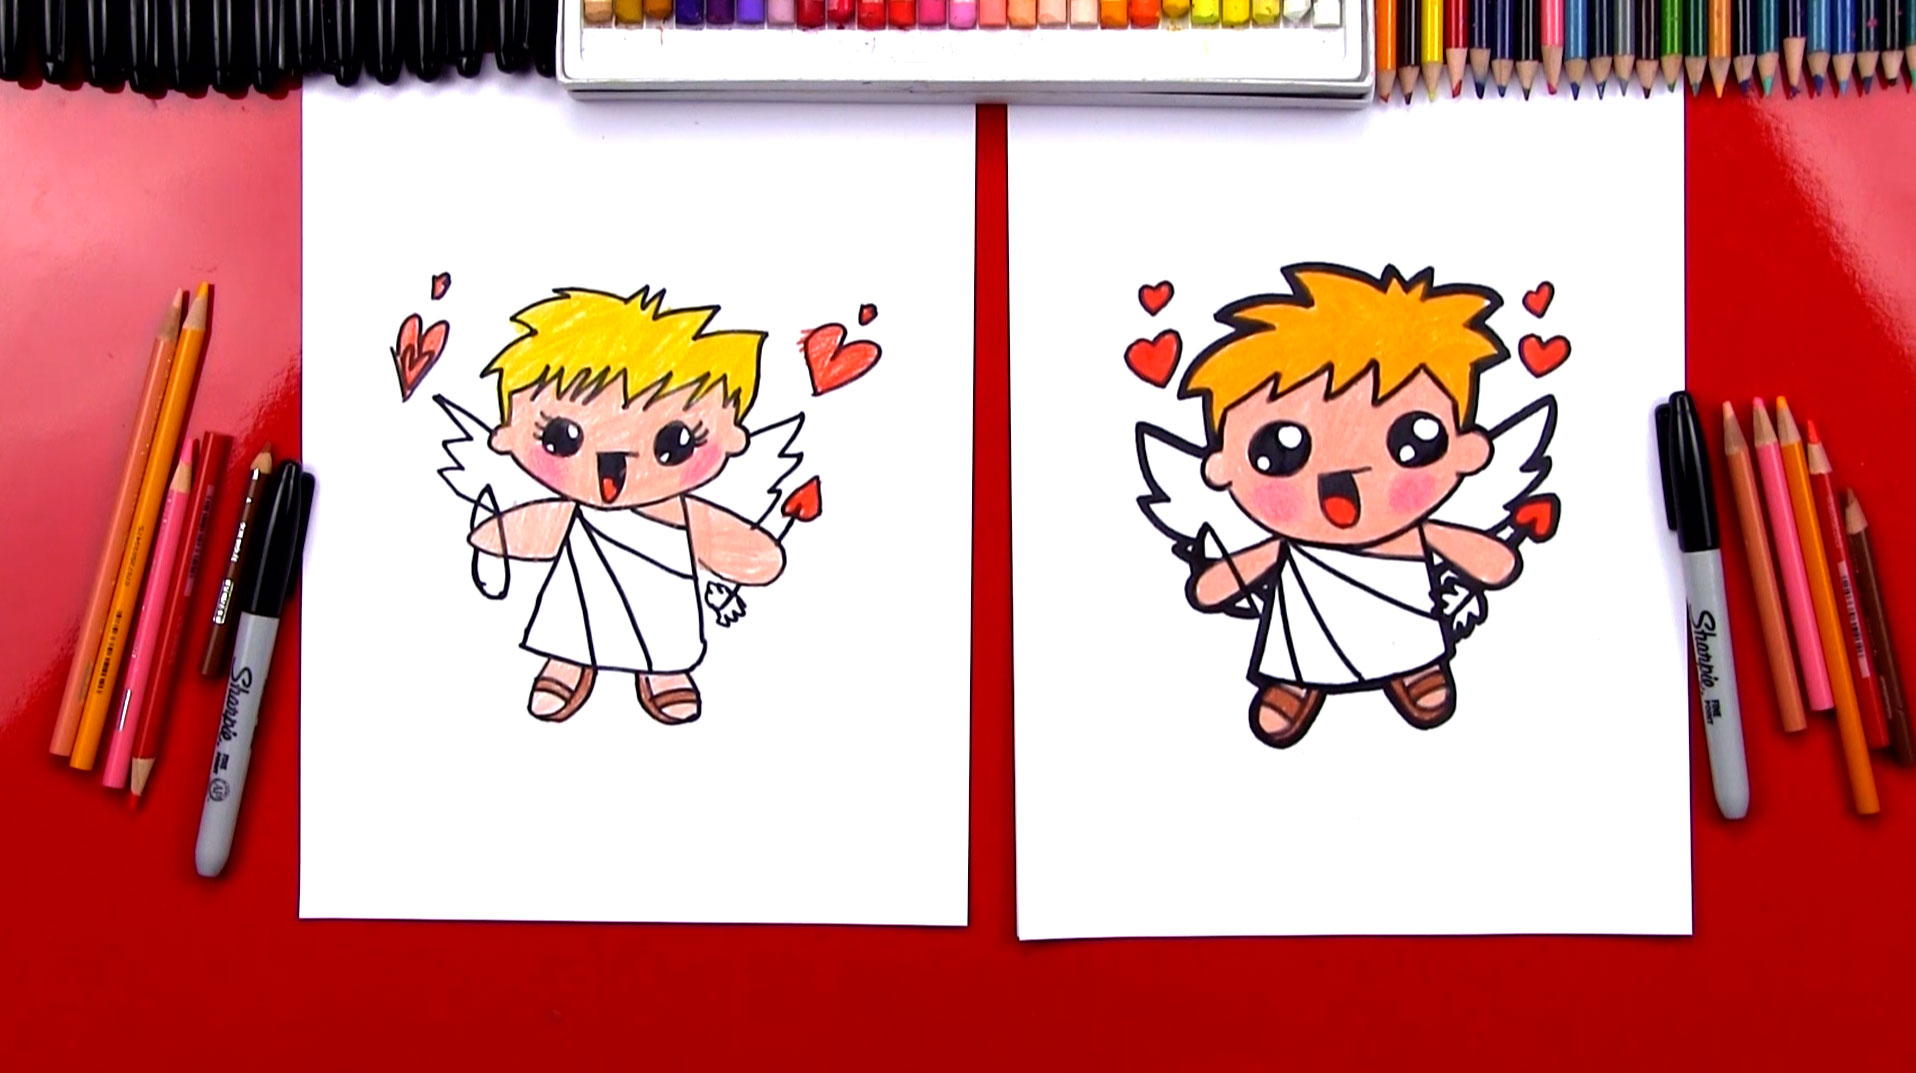 How To Draw A Valentine's Cartoon Cupid - Art For Kids Hub